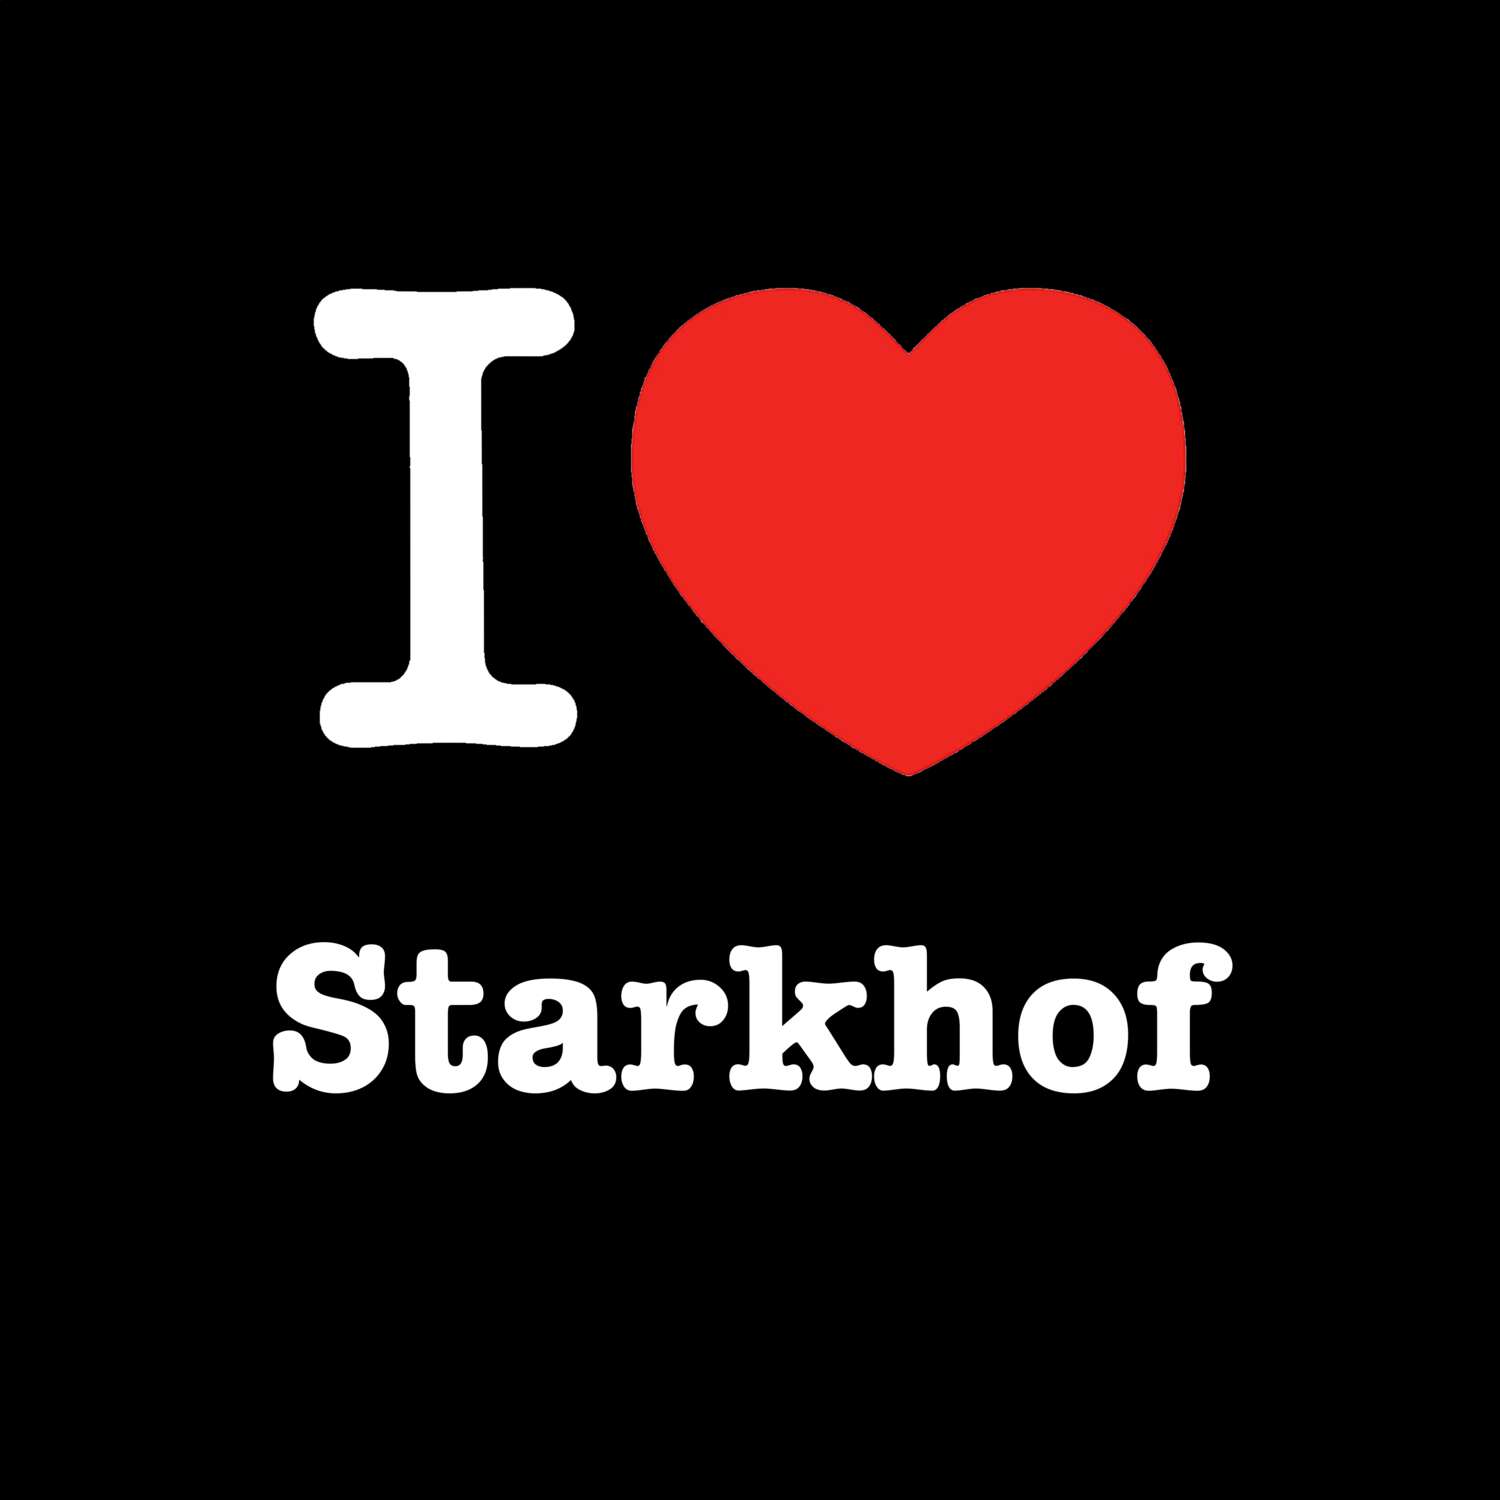 Starkhof T-Shirt »I love«